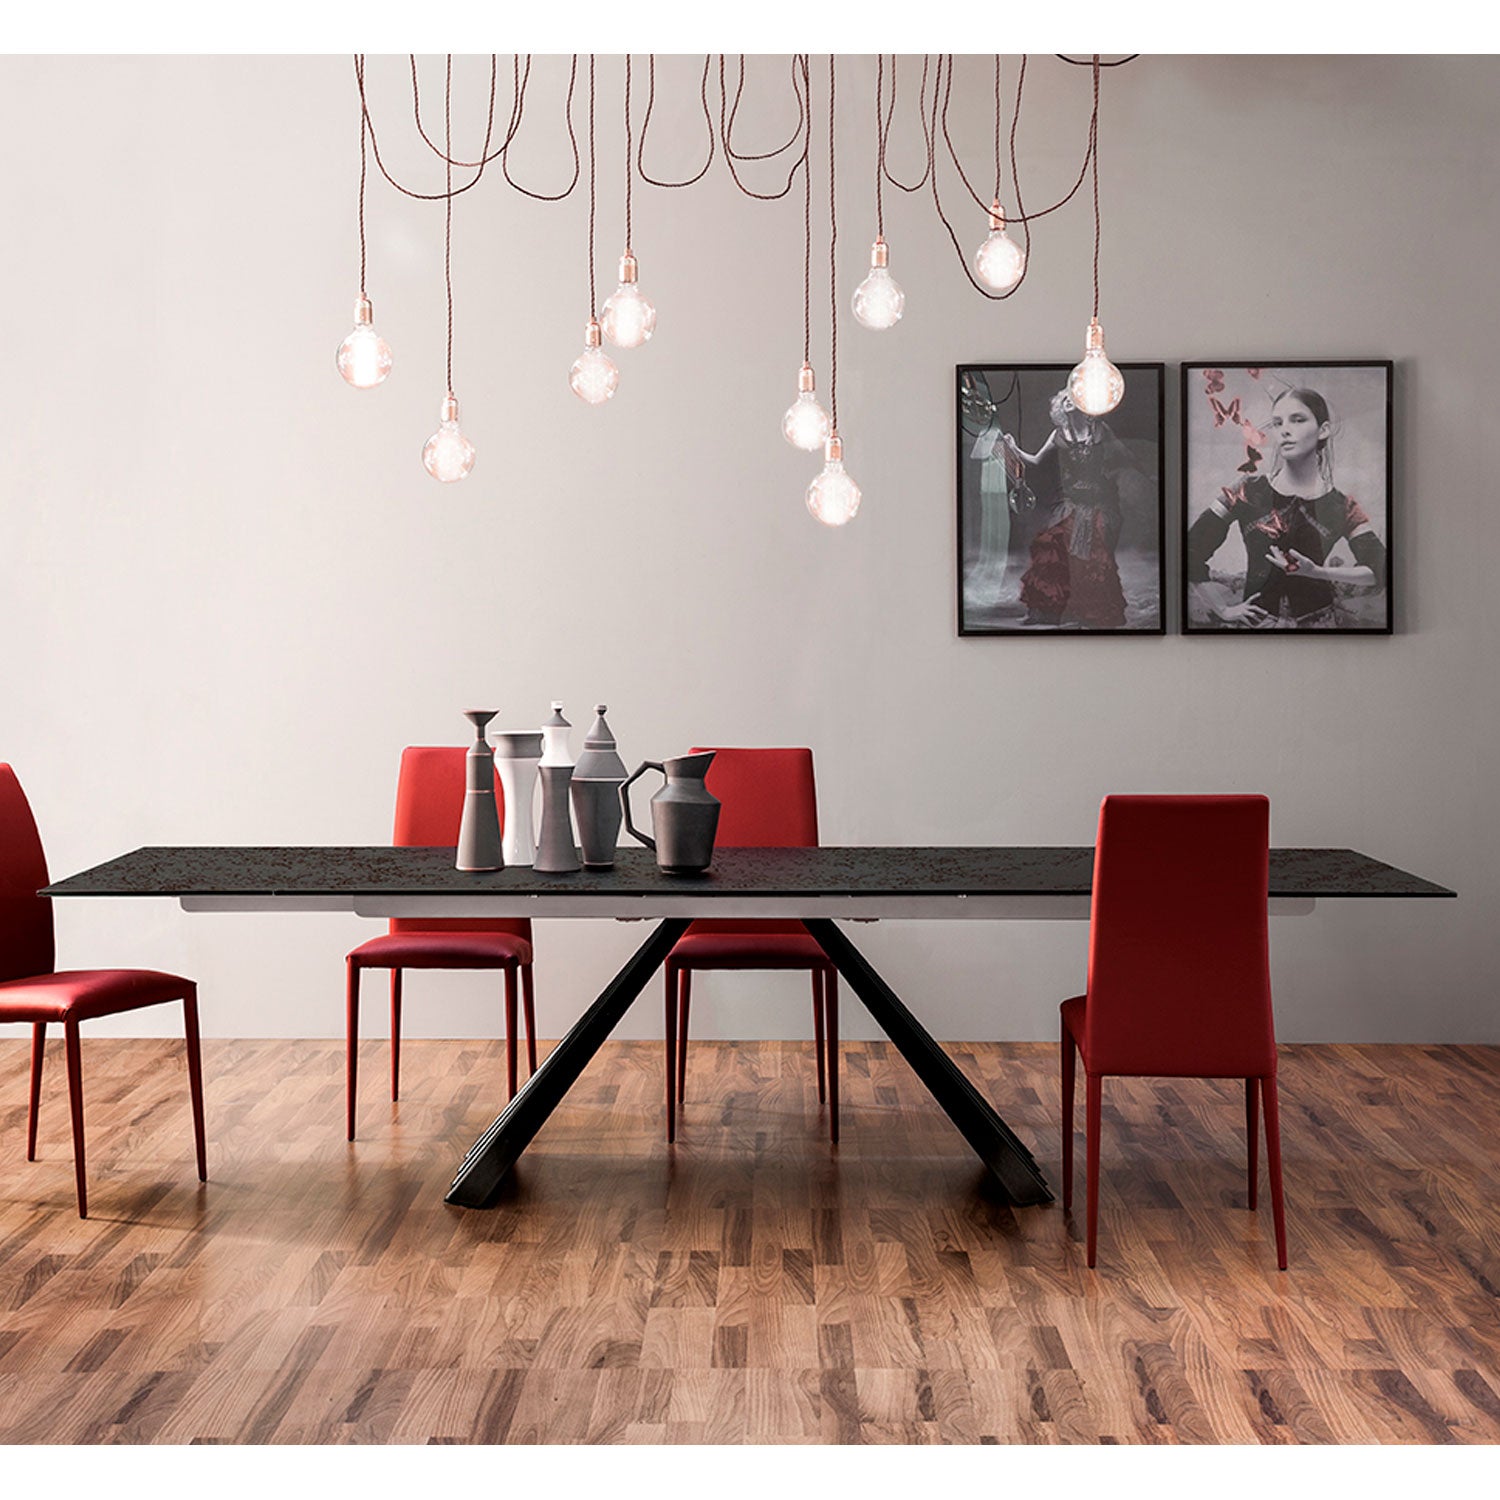 Ventaglio Extendable Table by Tonin Casa